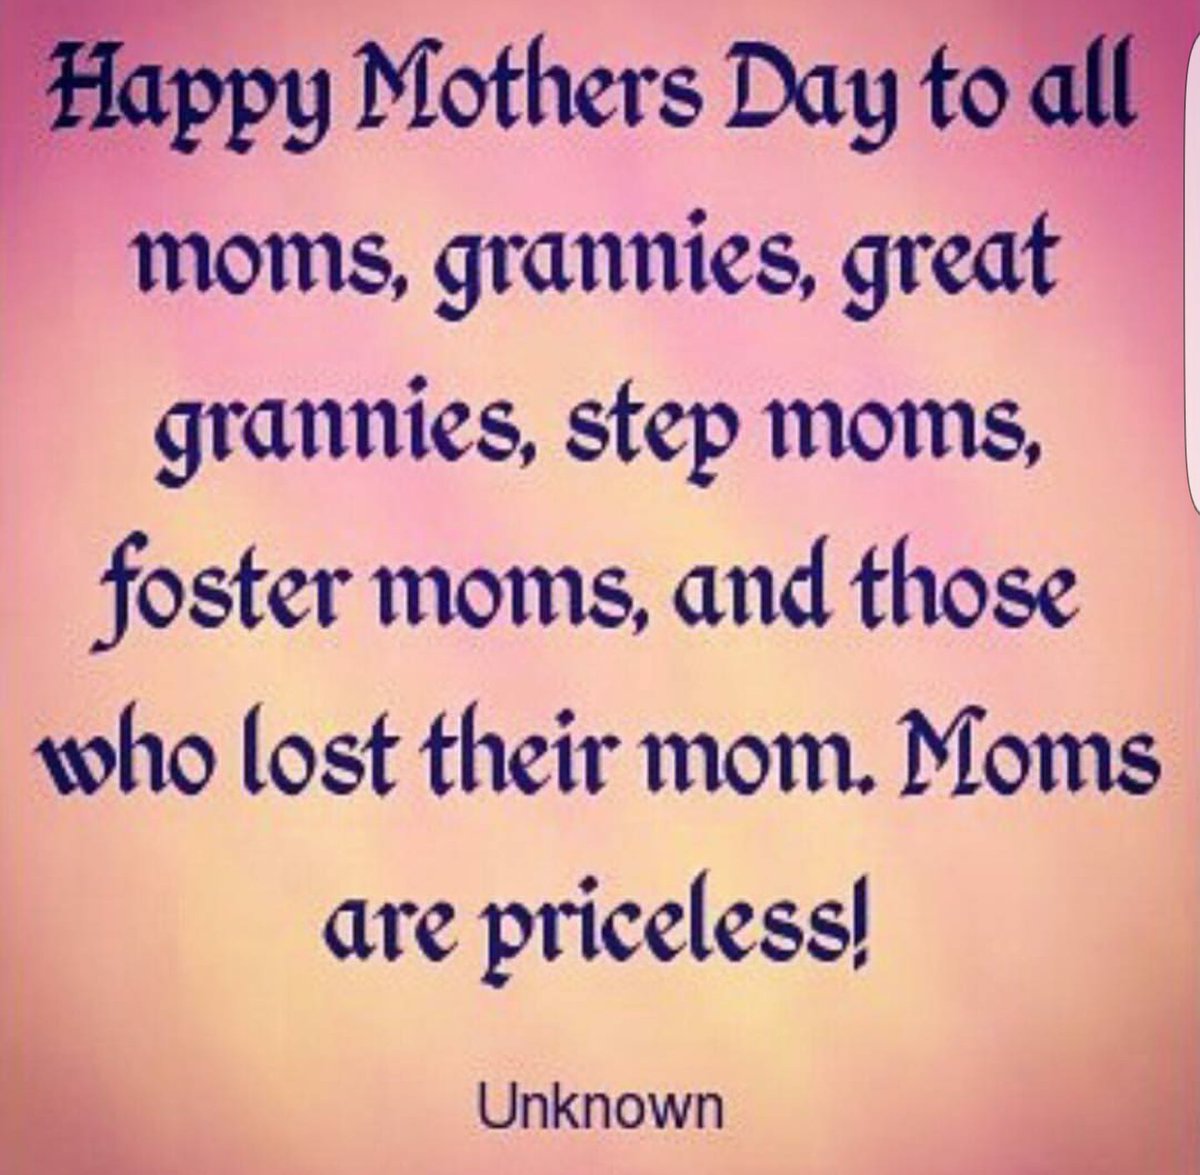 Happy Mothers Day!!! https://t.co/ViUR07uxHW